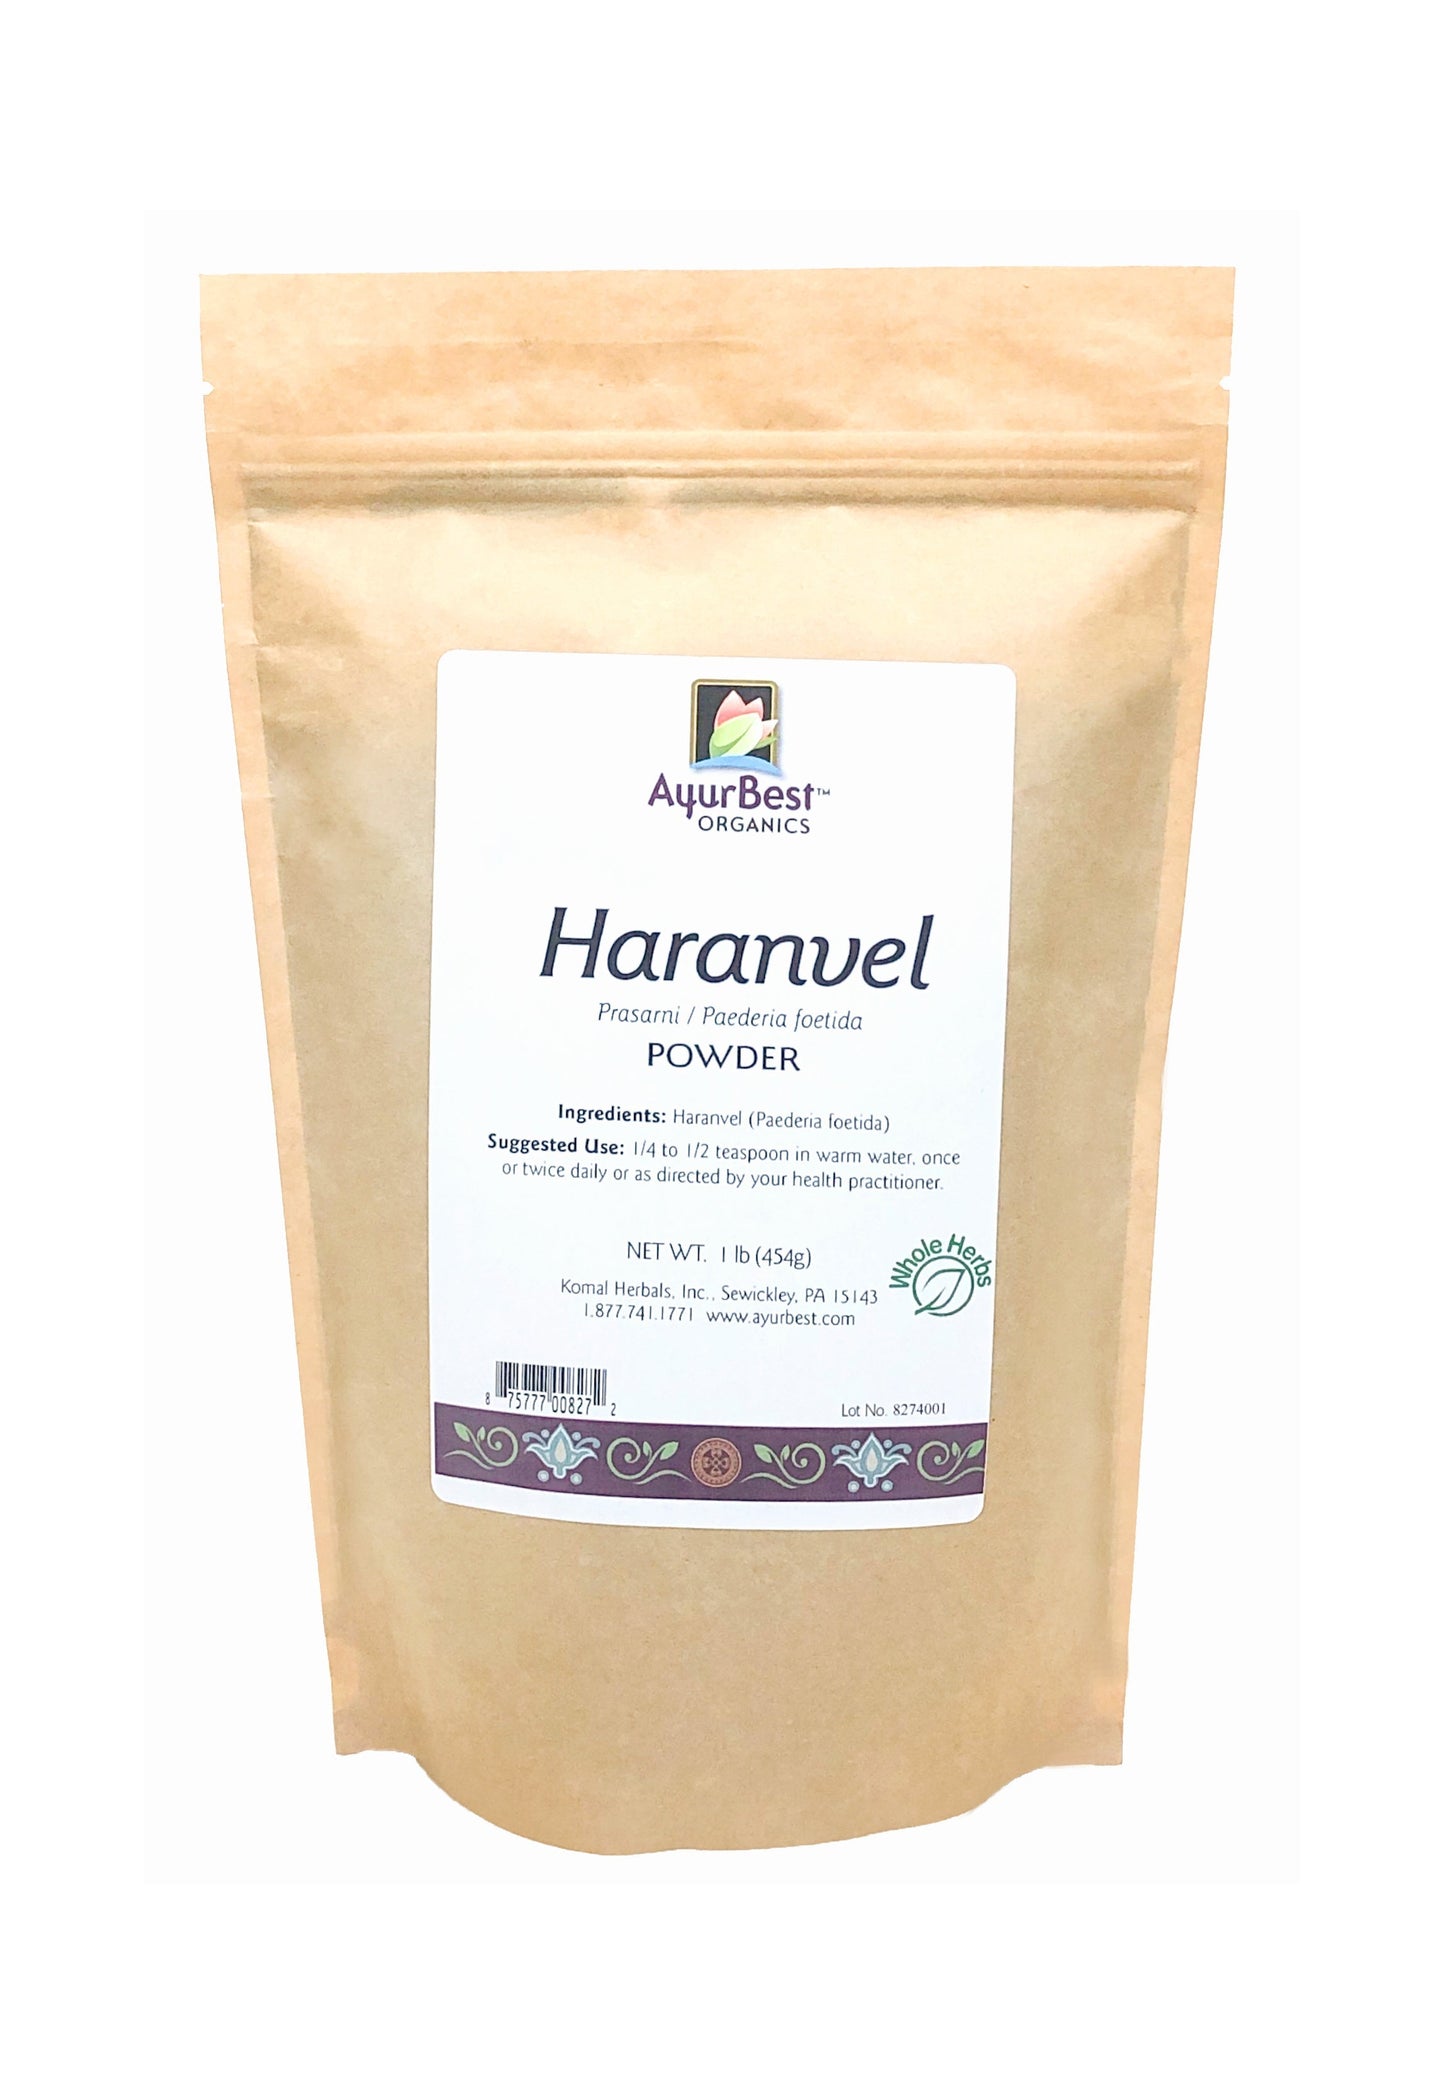 Wholesale Spices & Herbs - Haranvel Powder 1lb (454g) Bag